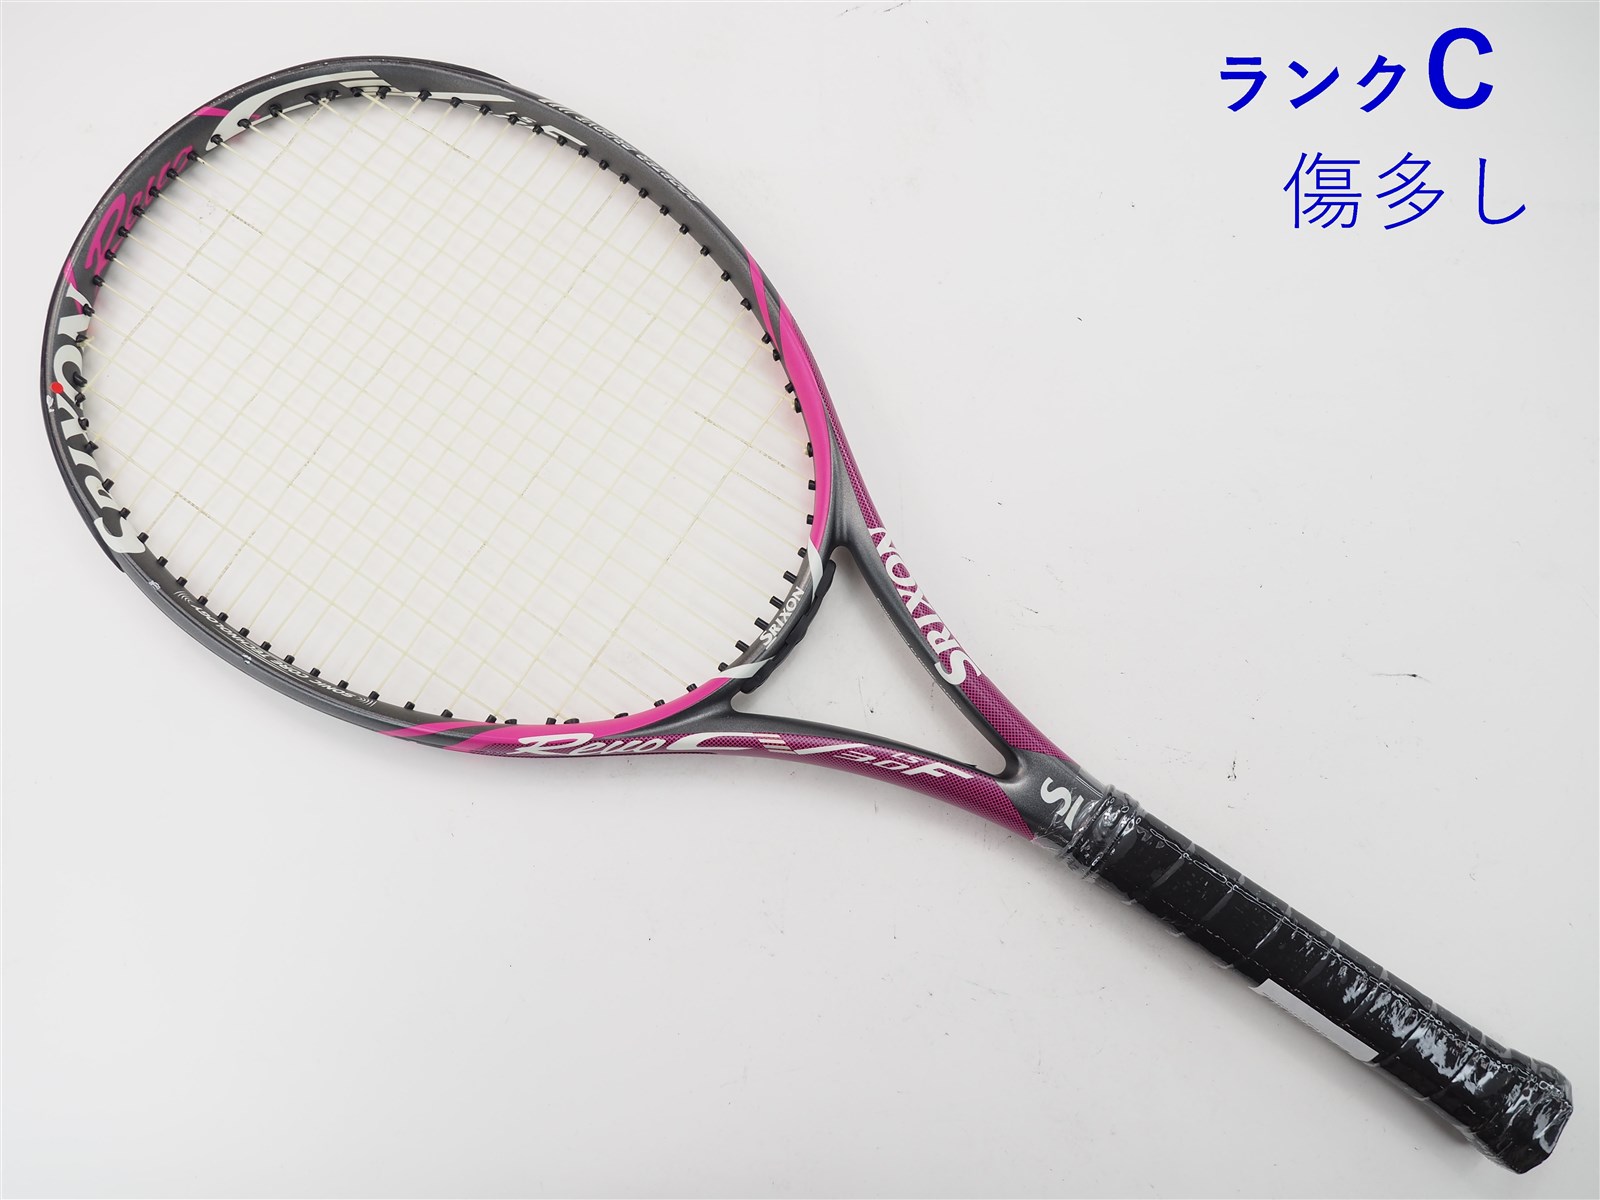 23-26-23mm重量テニスラケット スリクソン レヴォ CV 3.0 2018年モデル (G2)SRIXON REVO CV 3.0 2018